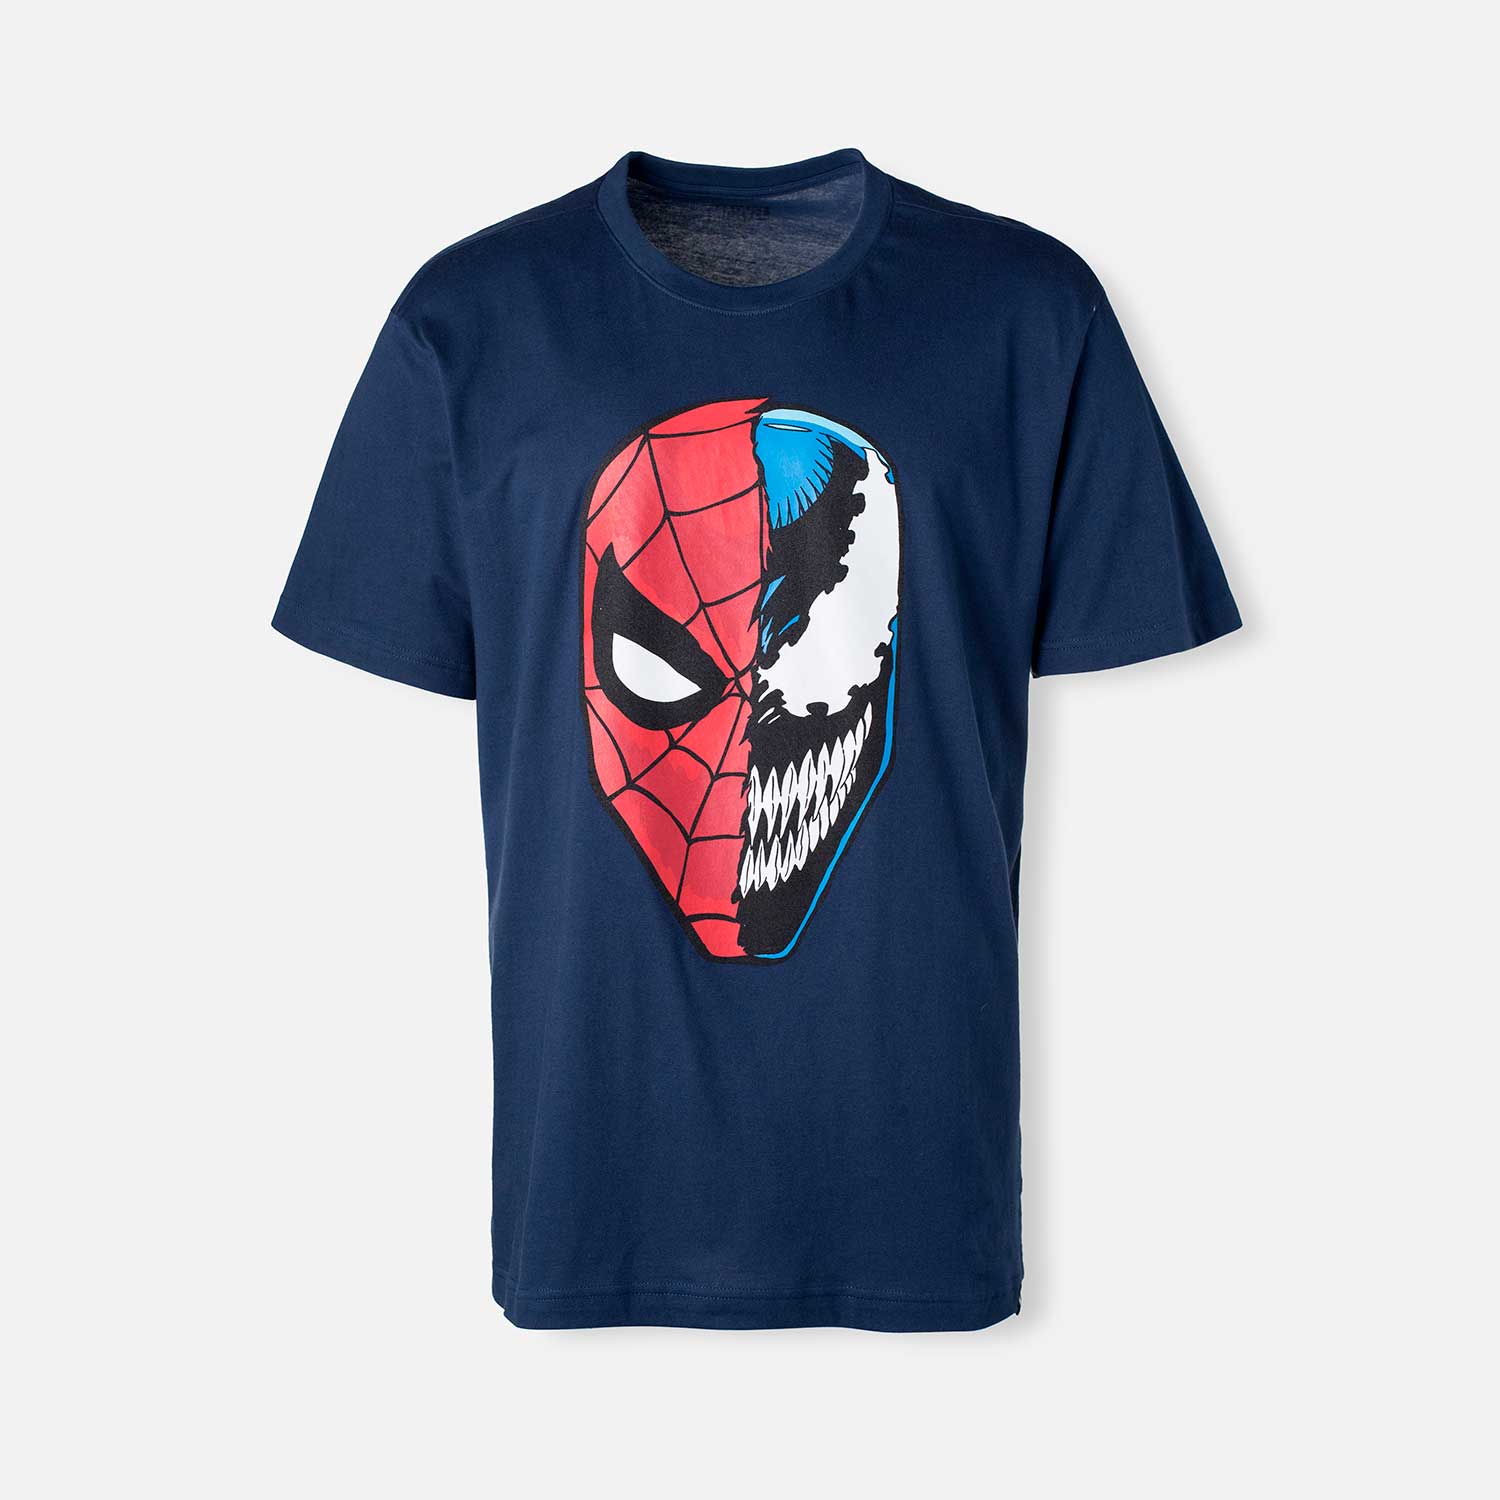 Camiseta de Spiderman manga corta azul para hombre S-0